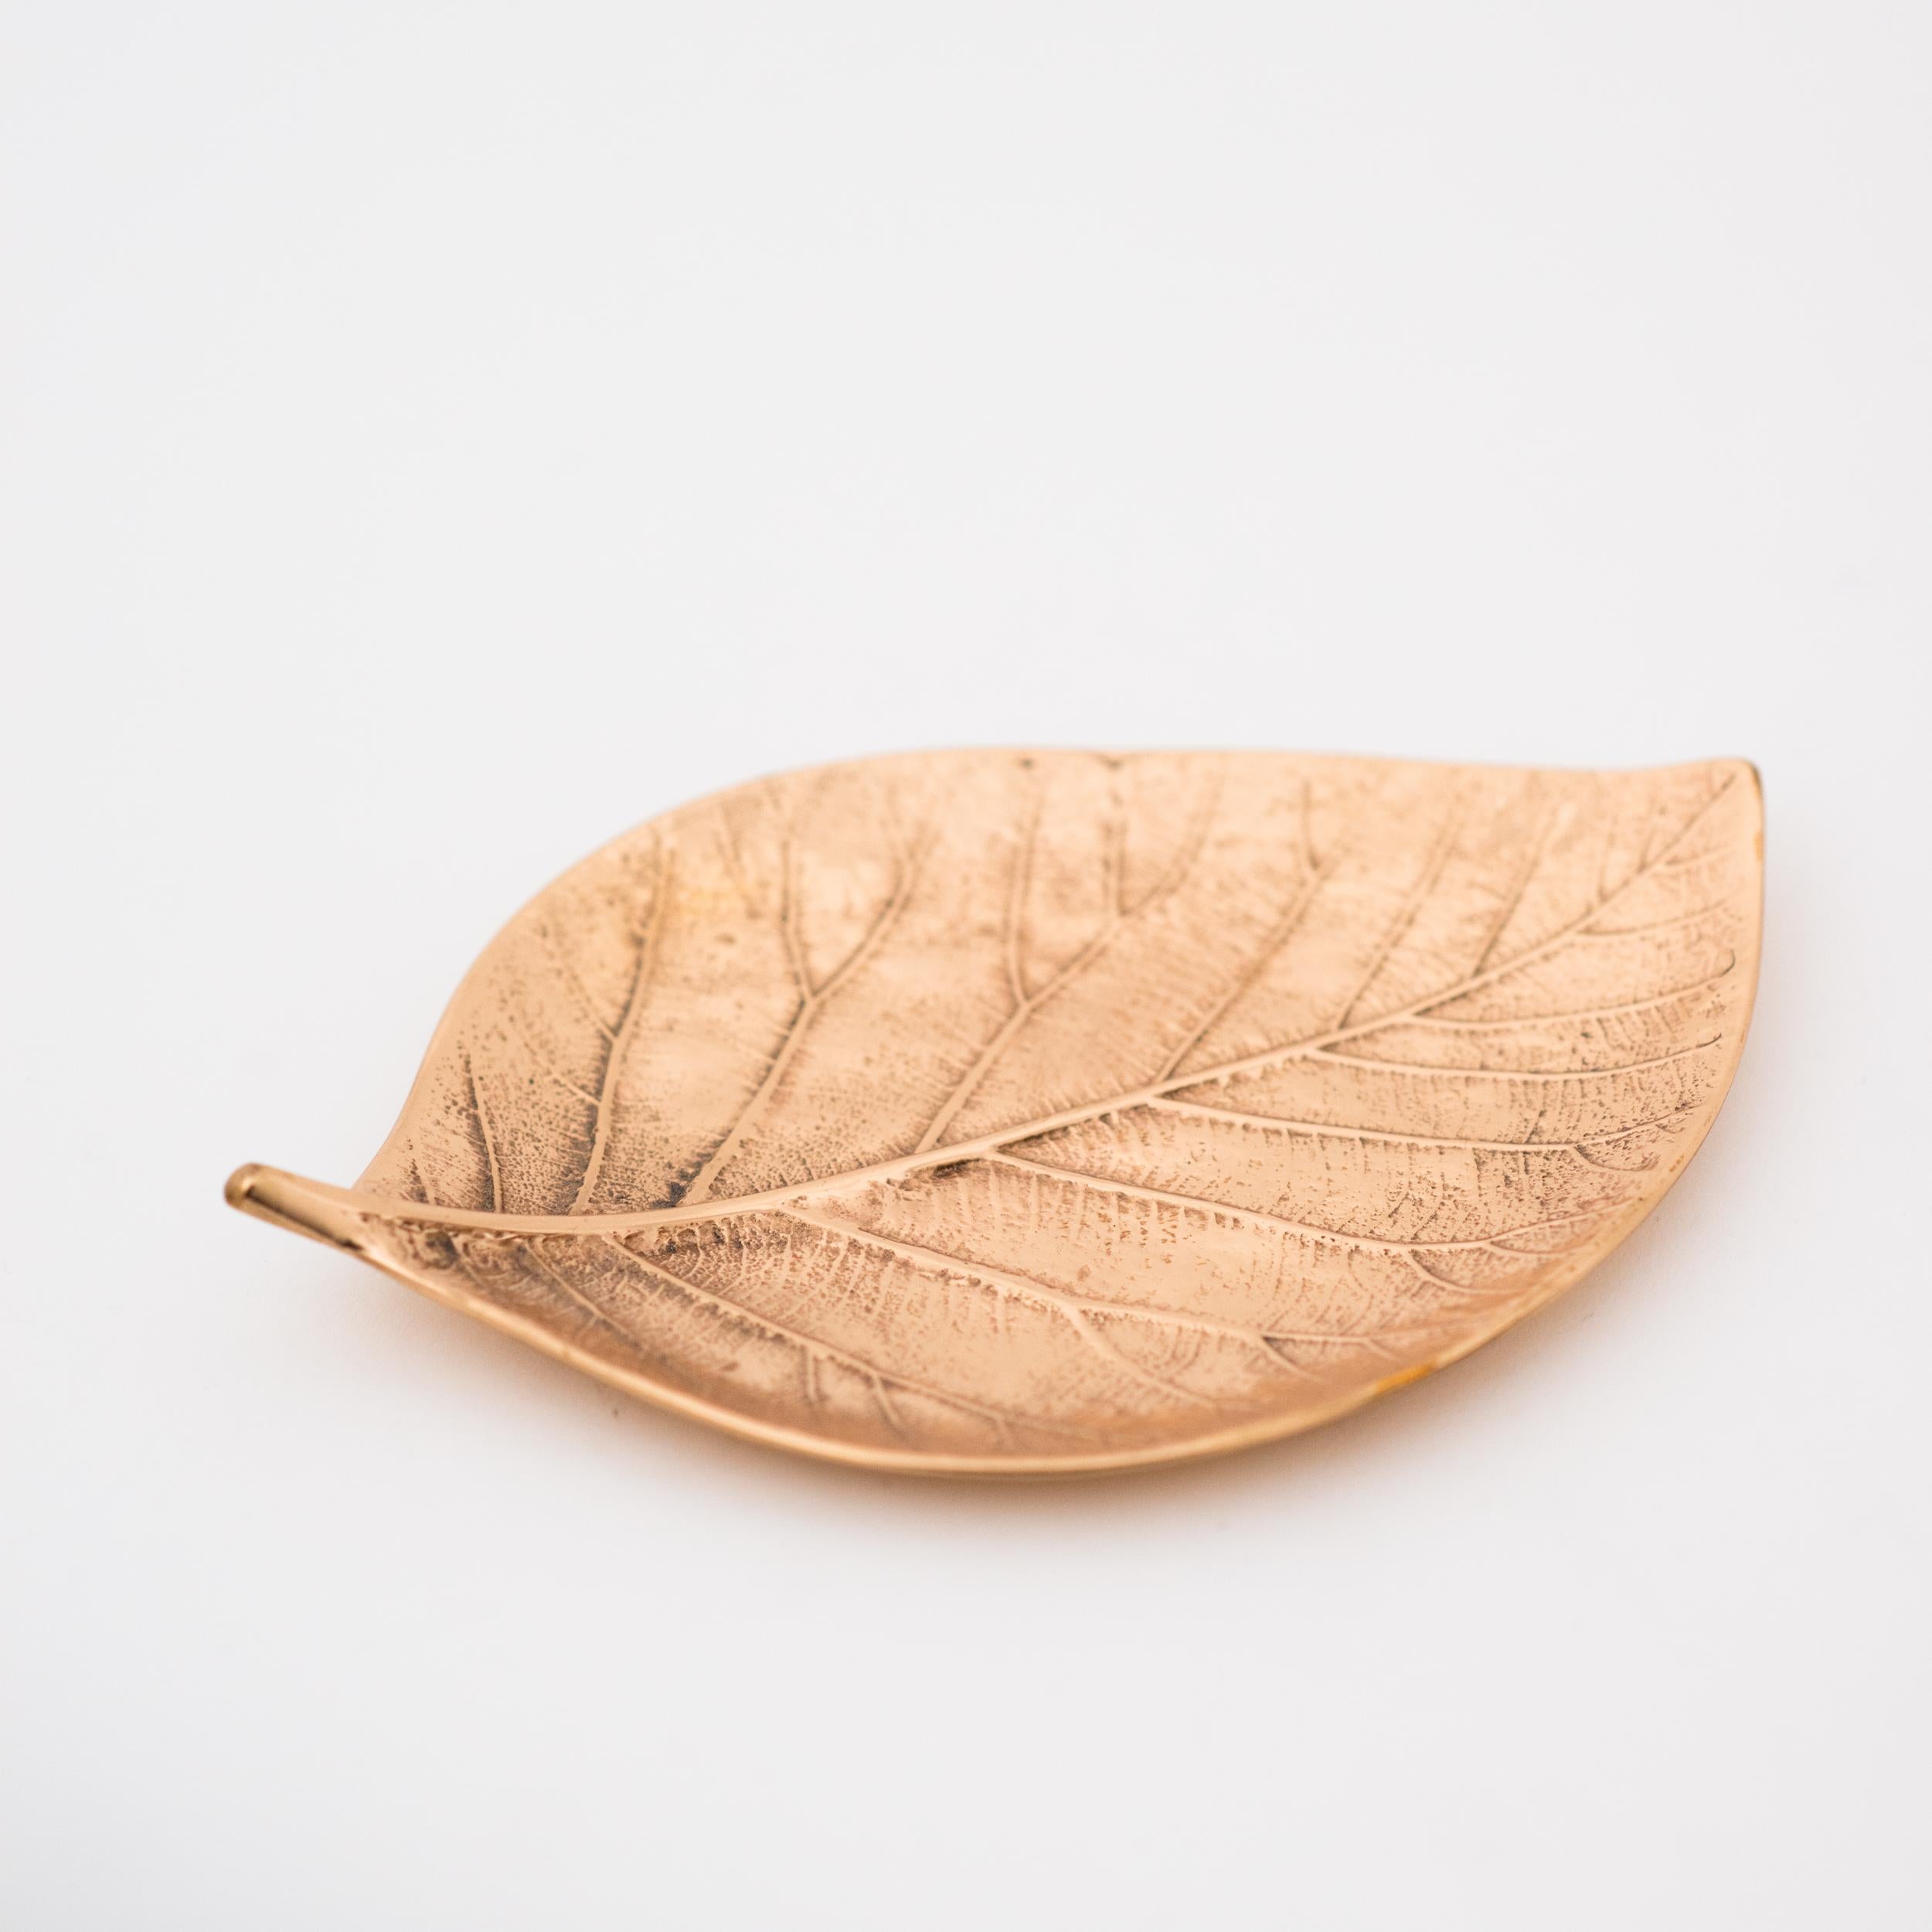 Organic Modern Decorative Handmade Cast Bronze Leaf Vide Poche Candleholder, Medium For Sale